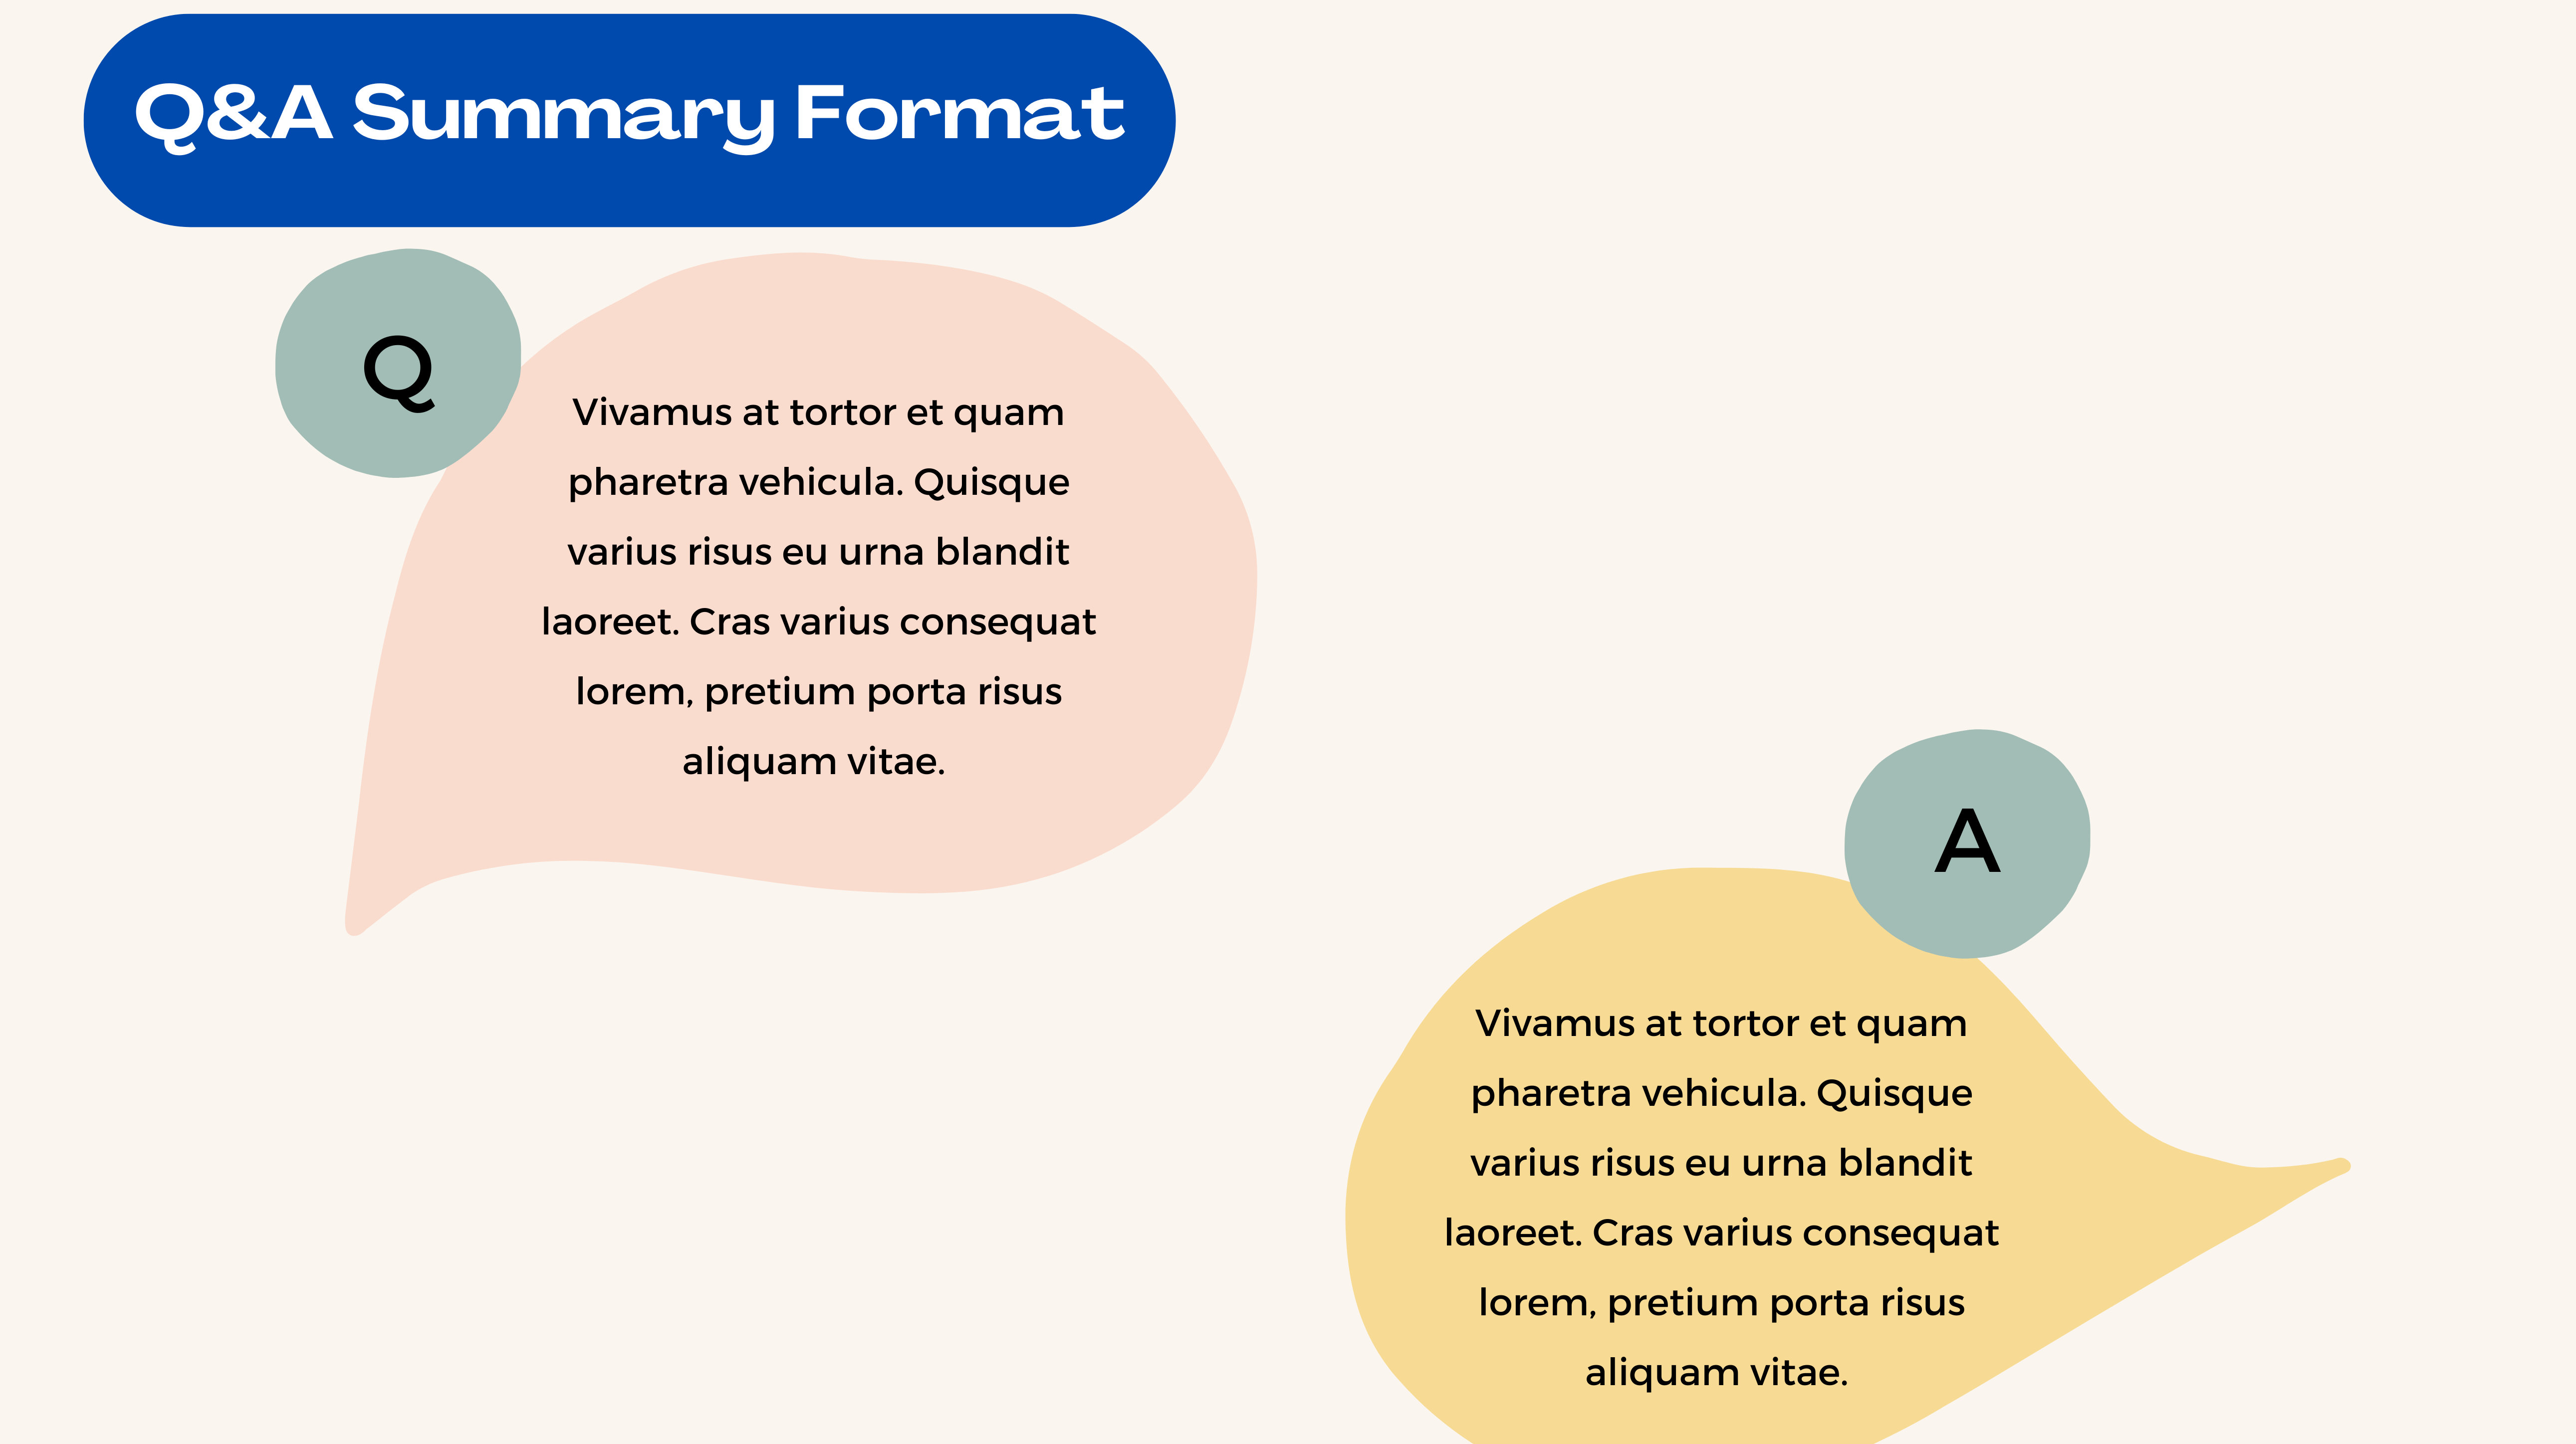 Q&A summary format